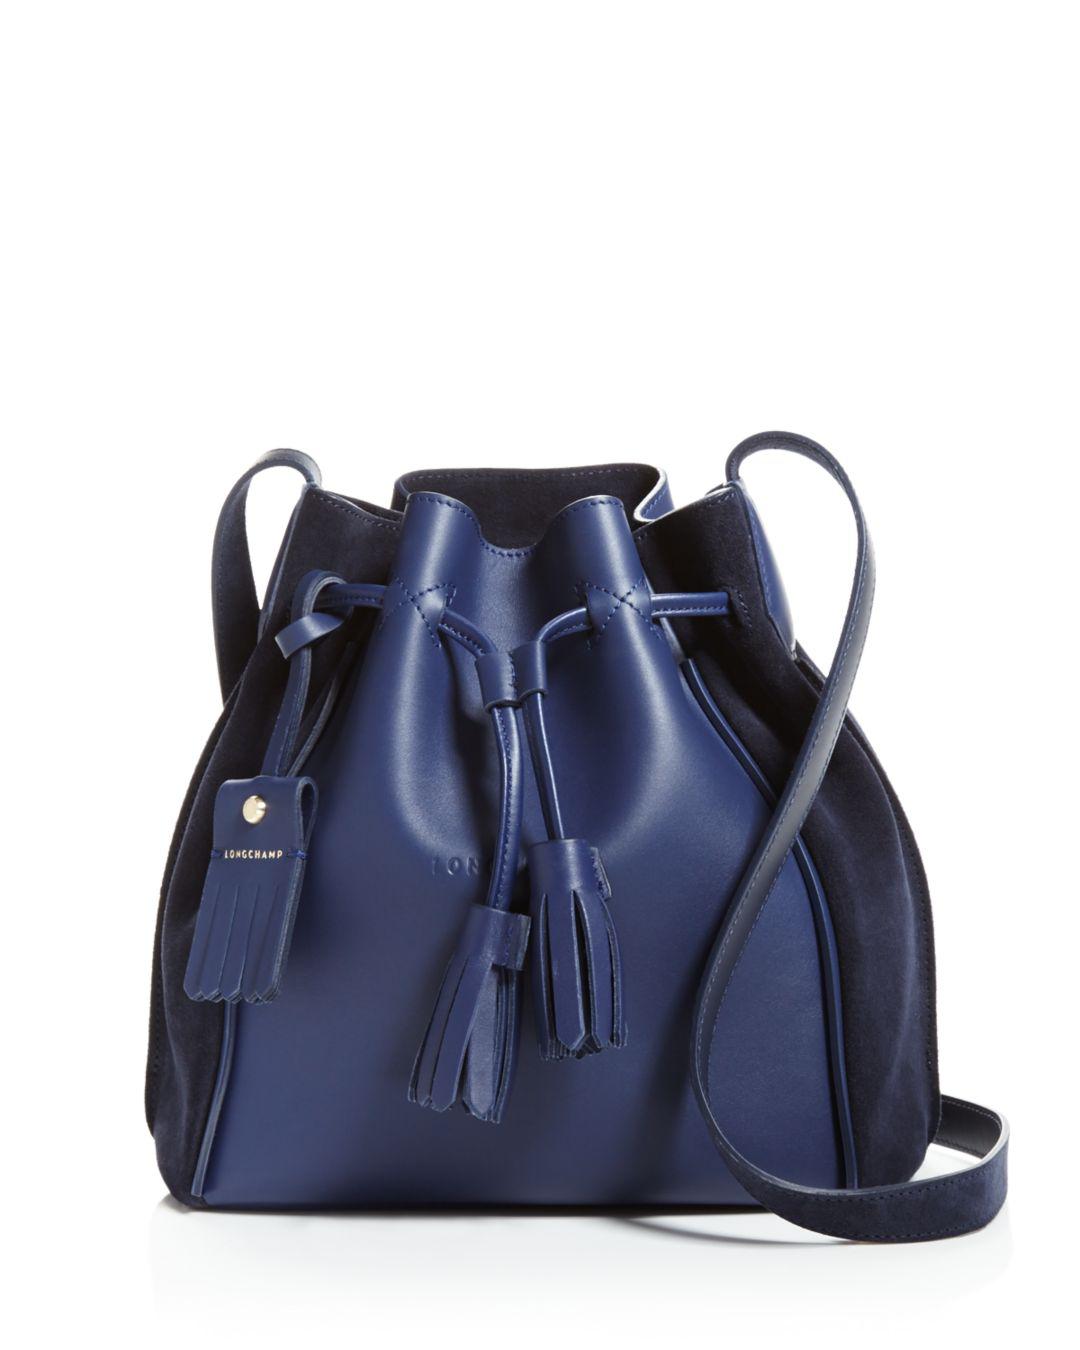 Longchamp Penelope Leather Bucket Bag in Blue - Lyst